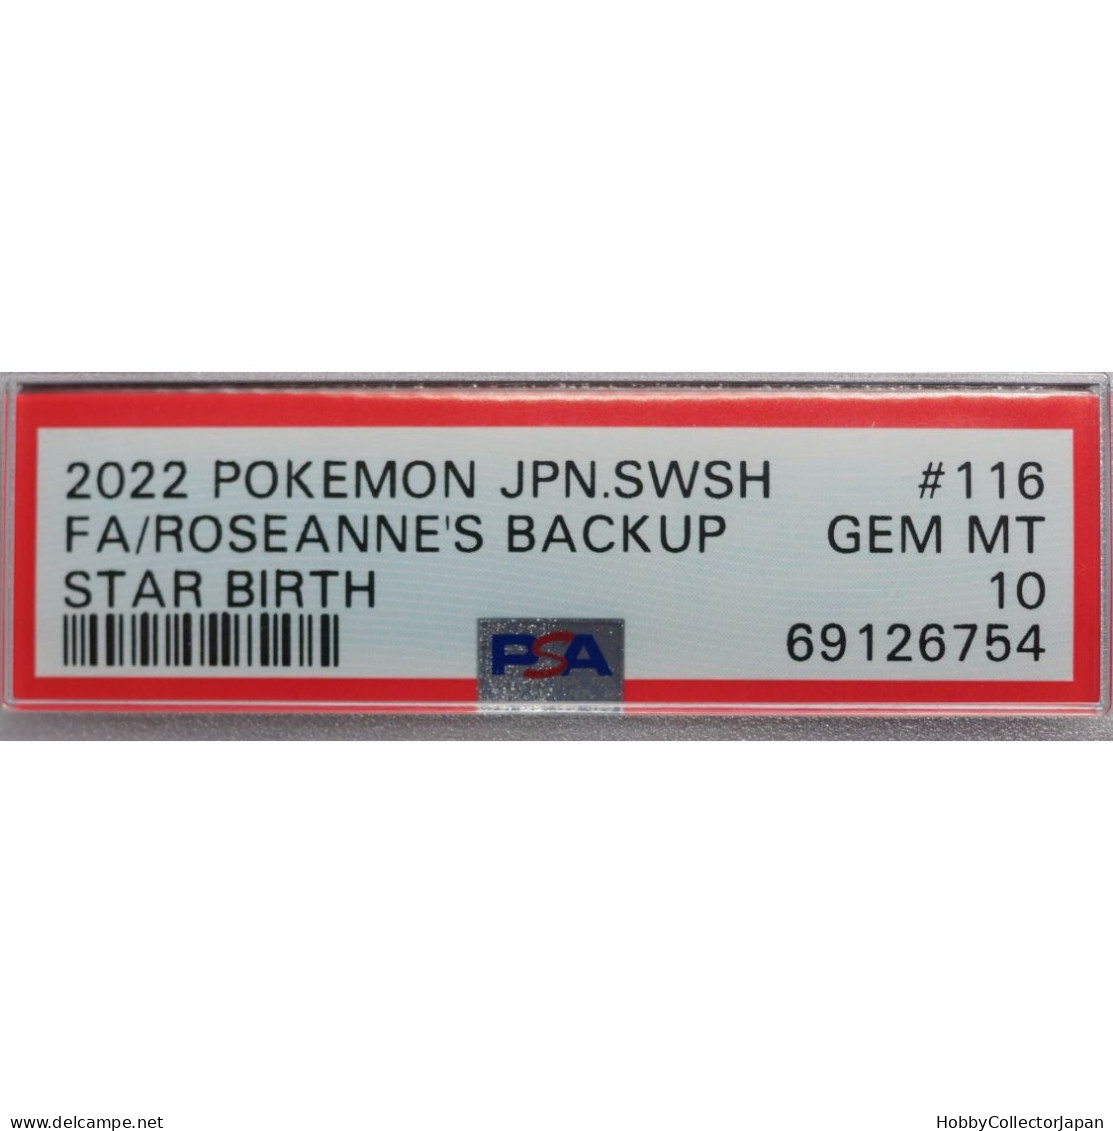 ROSEANNES'S BACKUP S9 F 116/100 SR PSA10 - Sword & Shield